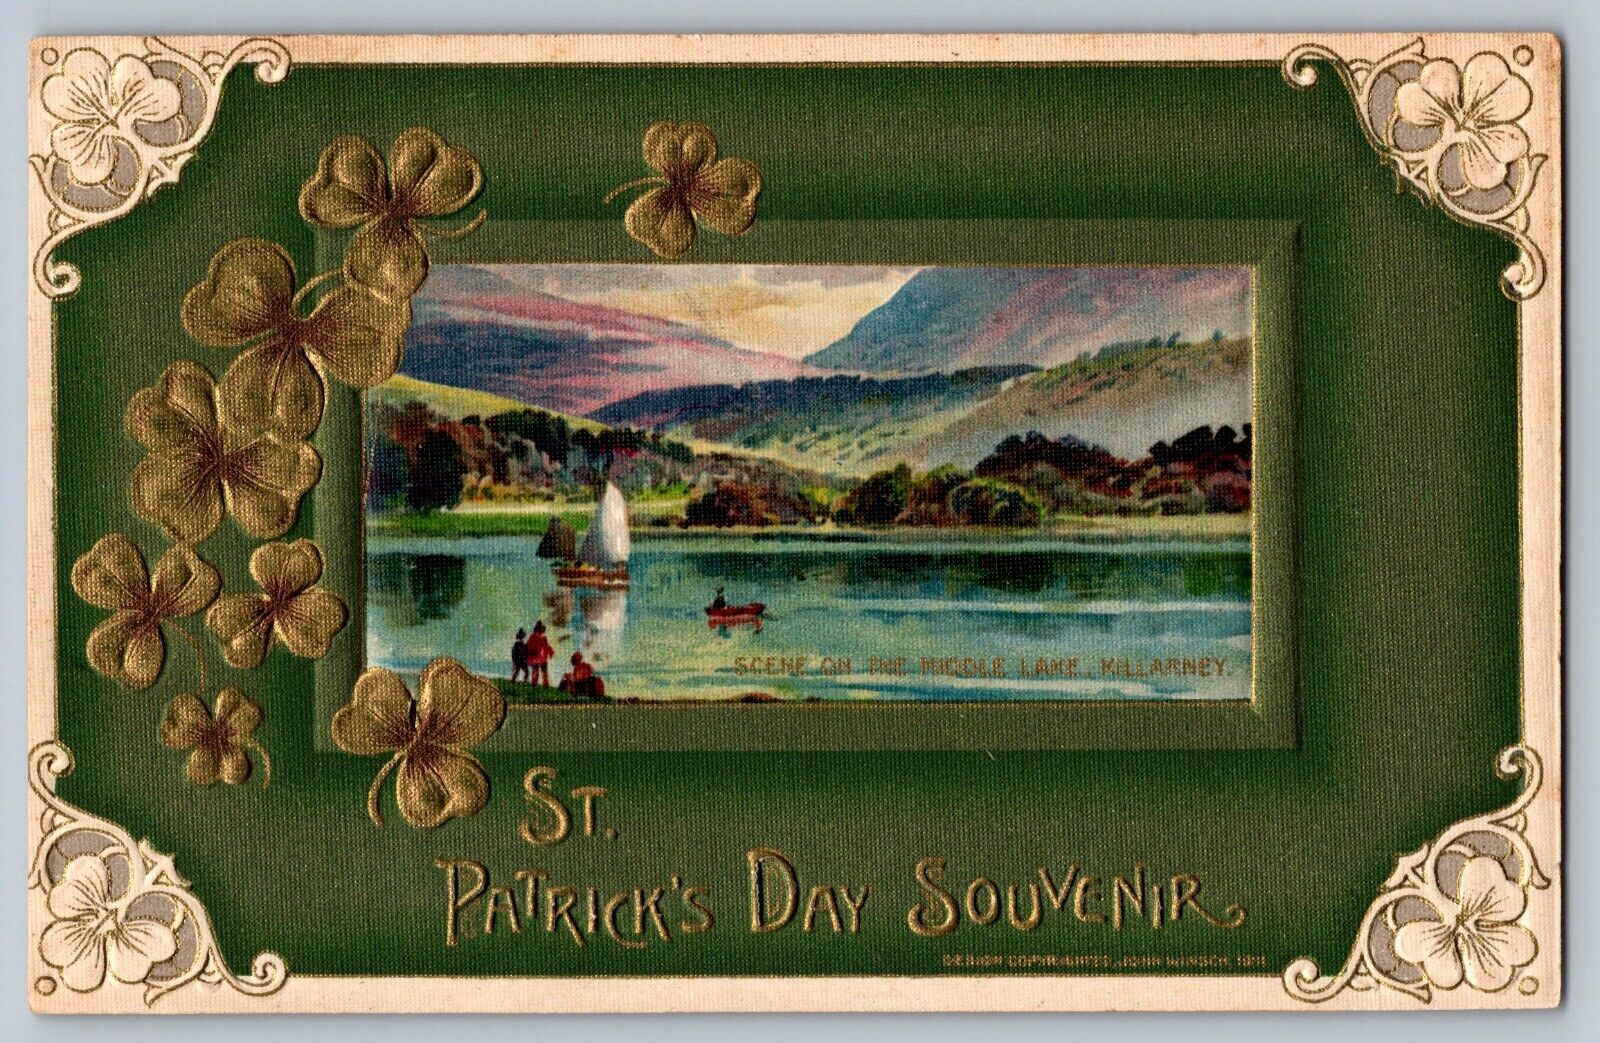 1913 PC SAINT PATRICKS DAY SOUVENIR by Winsch INSERT LAKE SCENERY